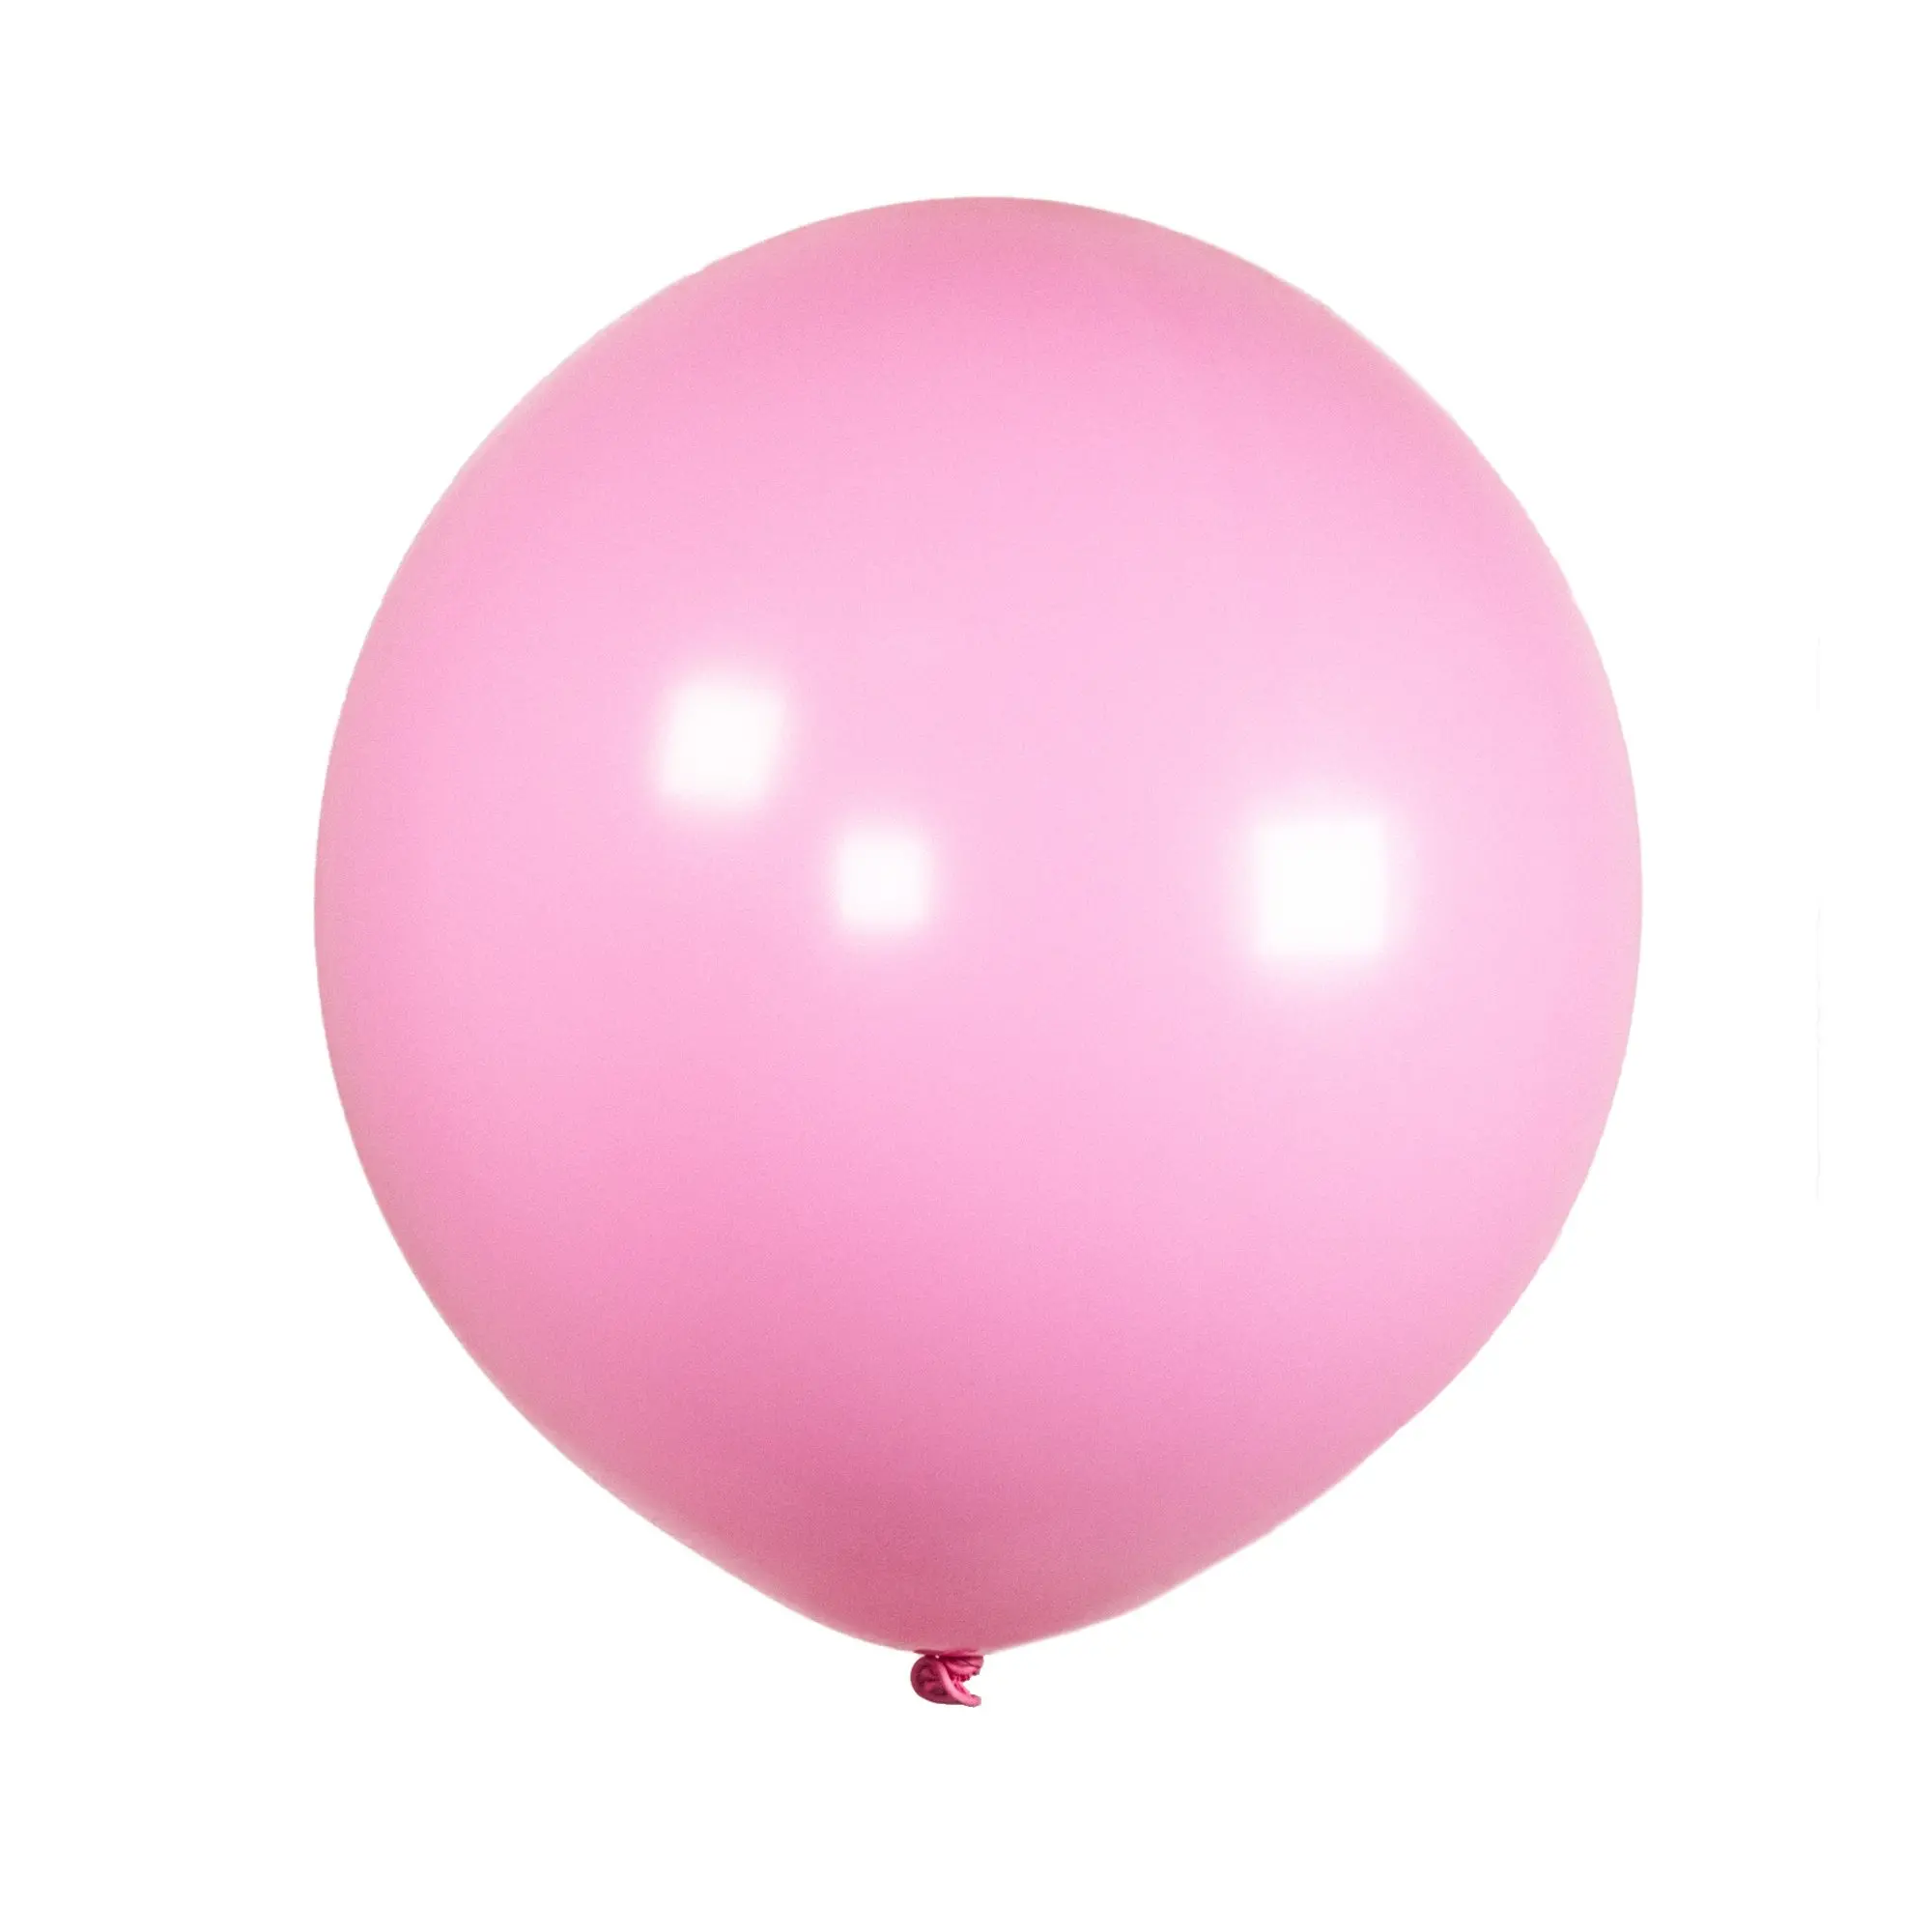 Latex colorful balloon – 48 cm - Rose